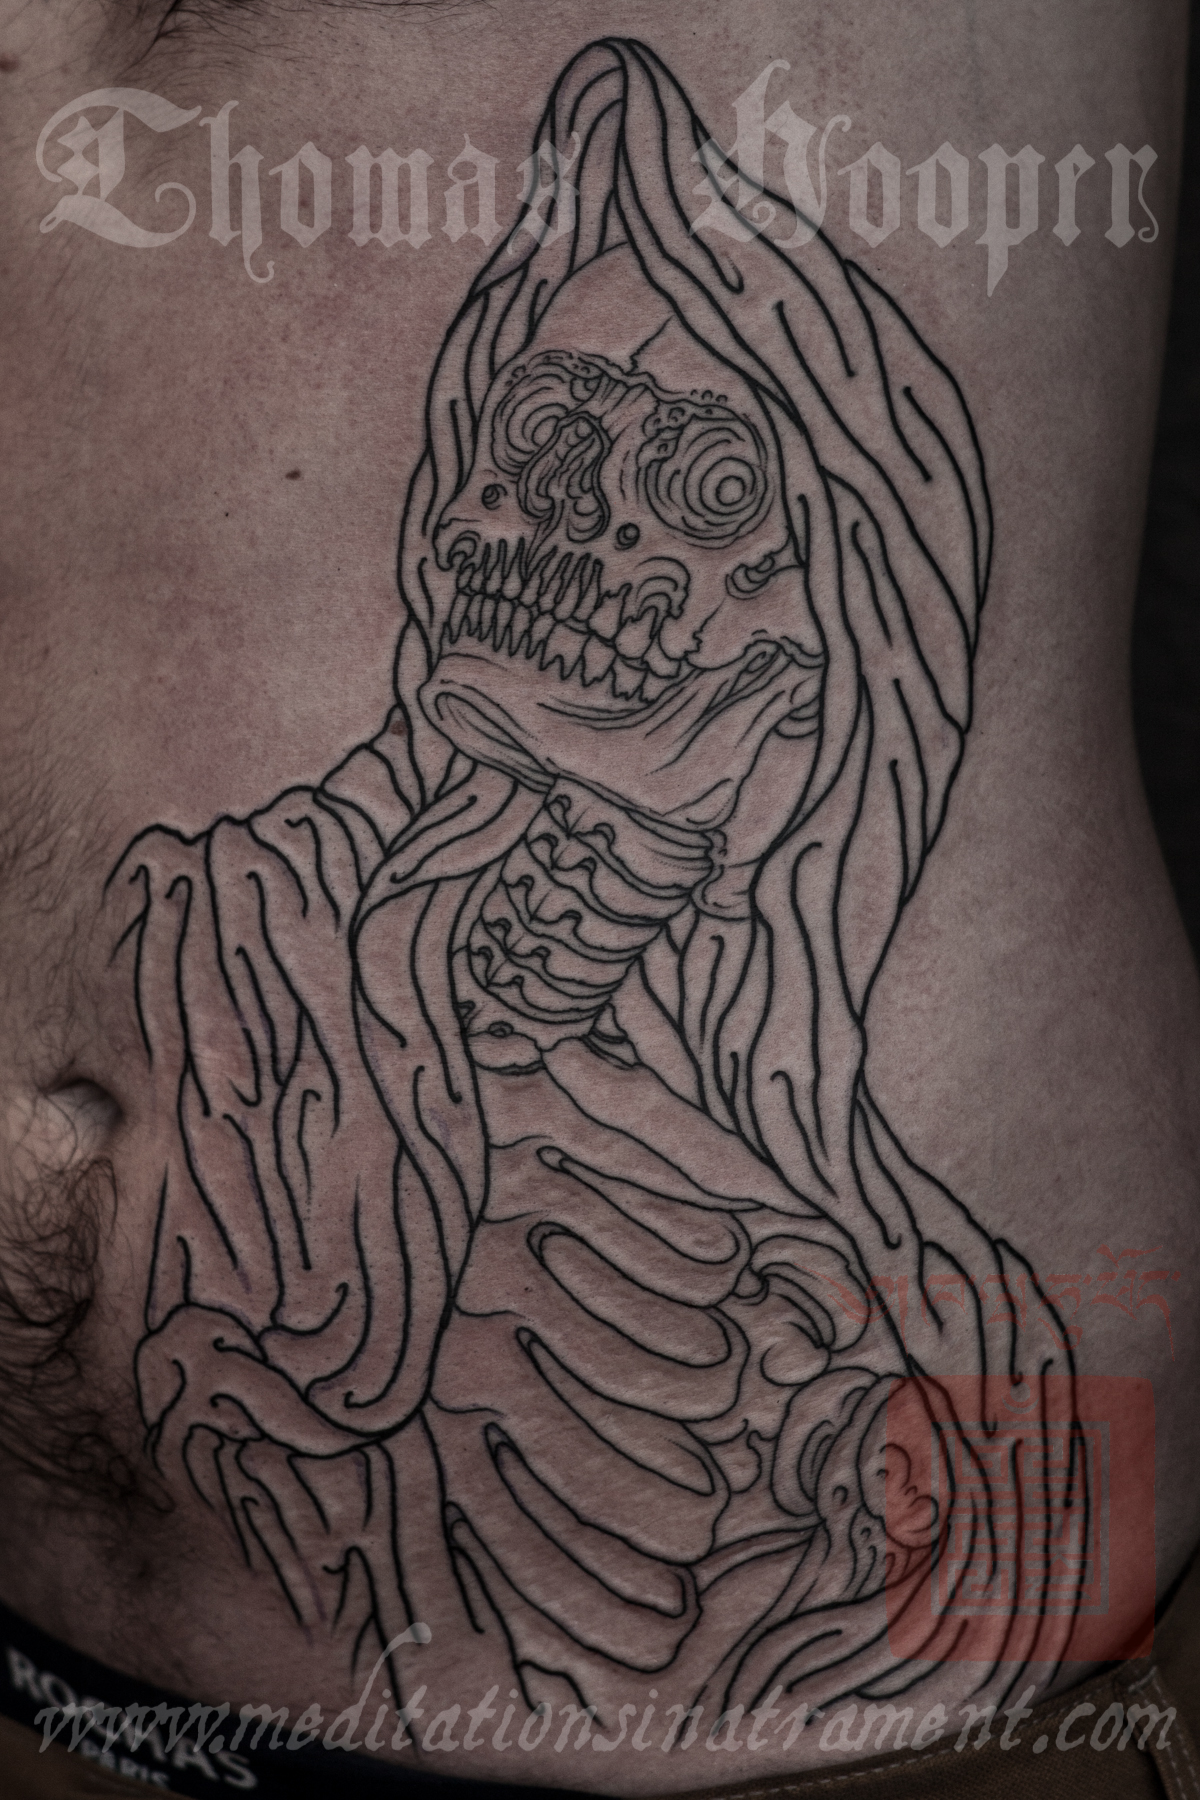 crew skull tattooing